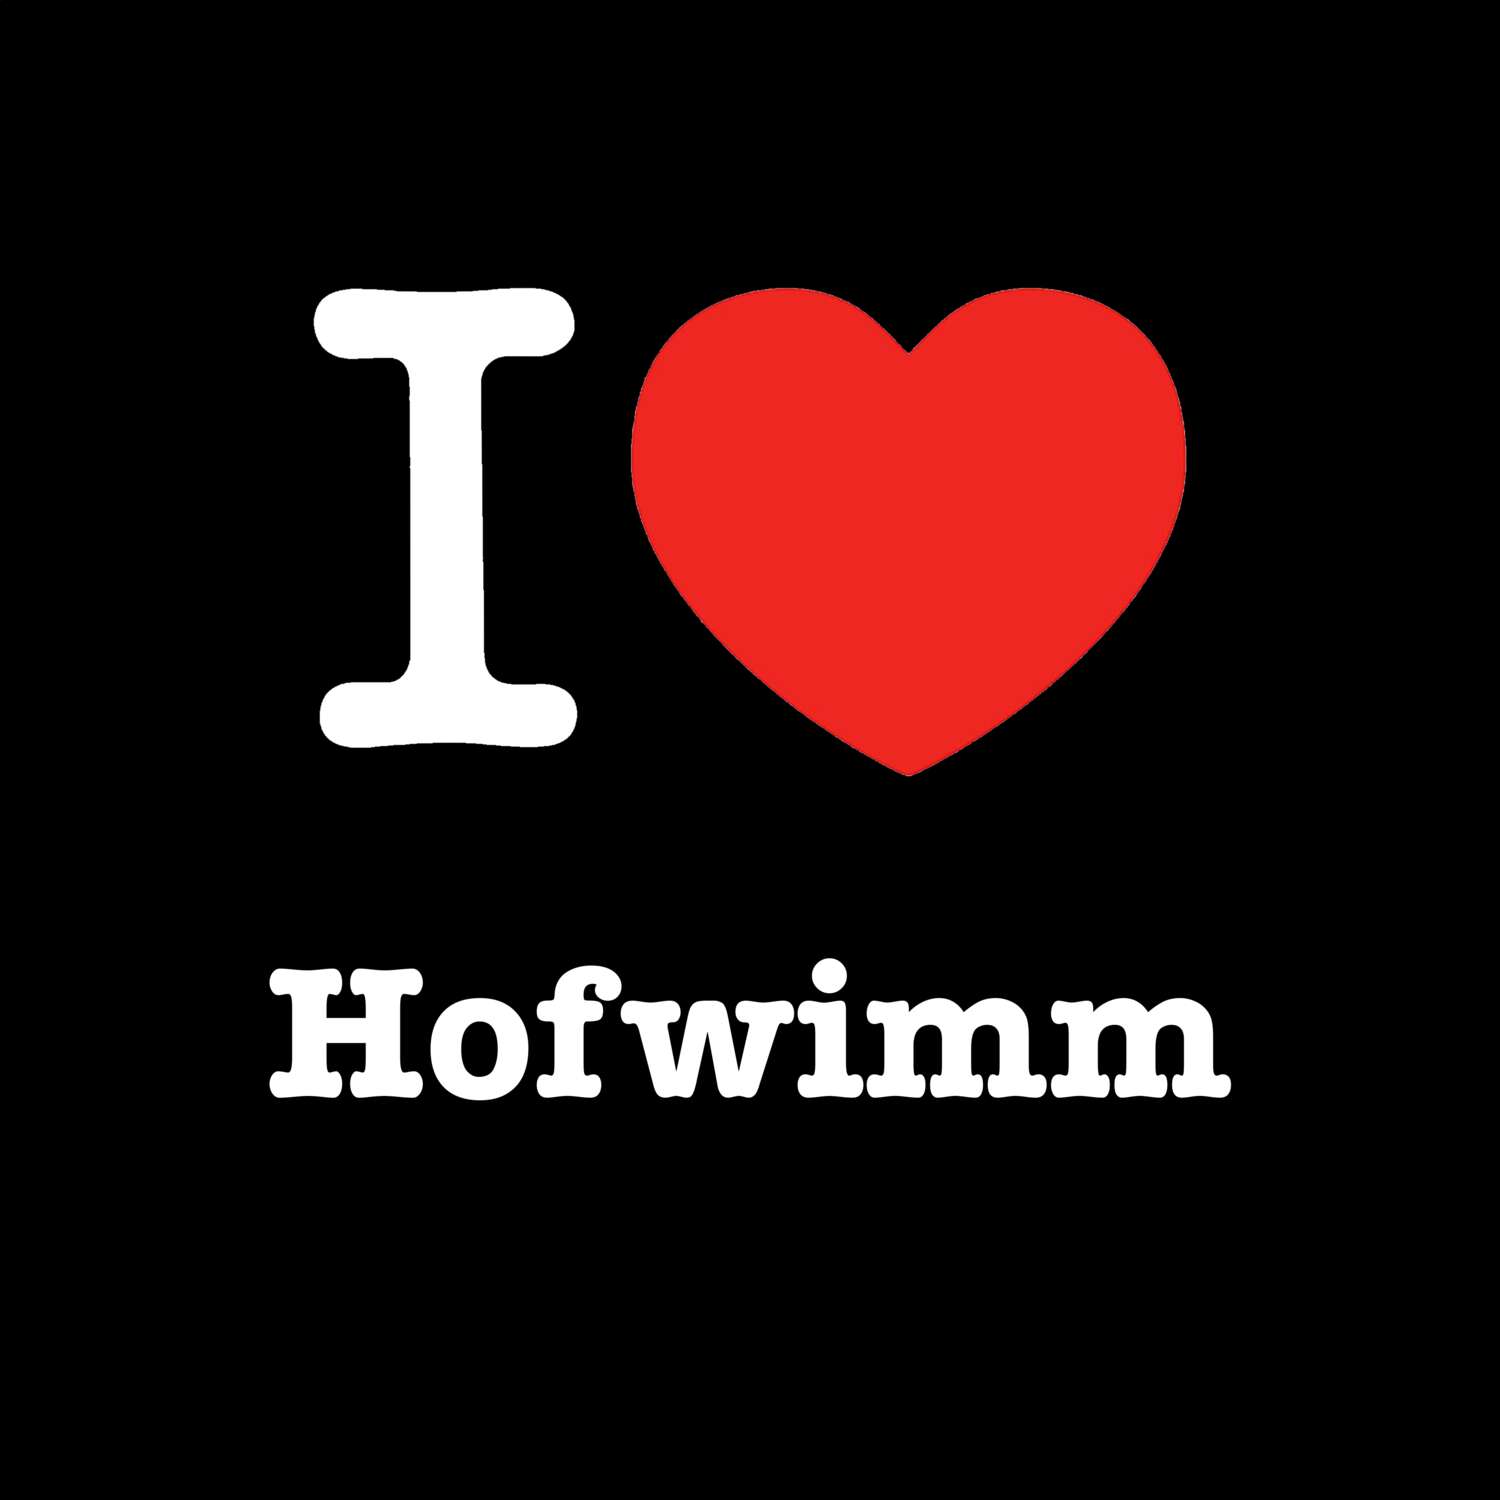 Hofwimm T-Shirt »I love«